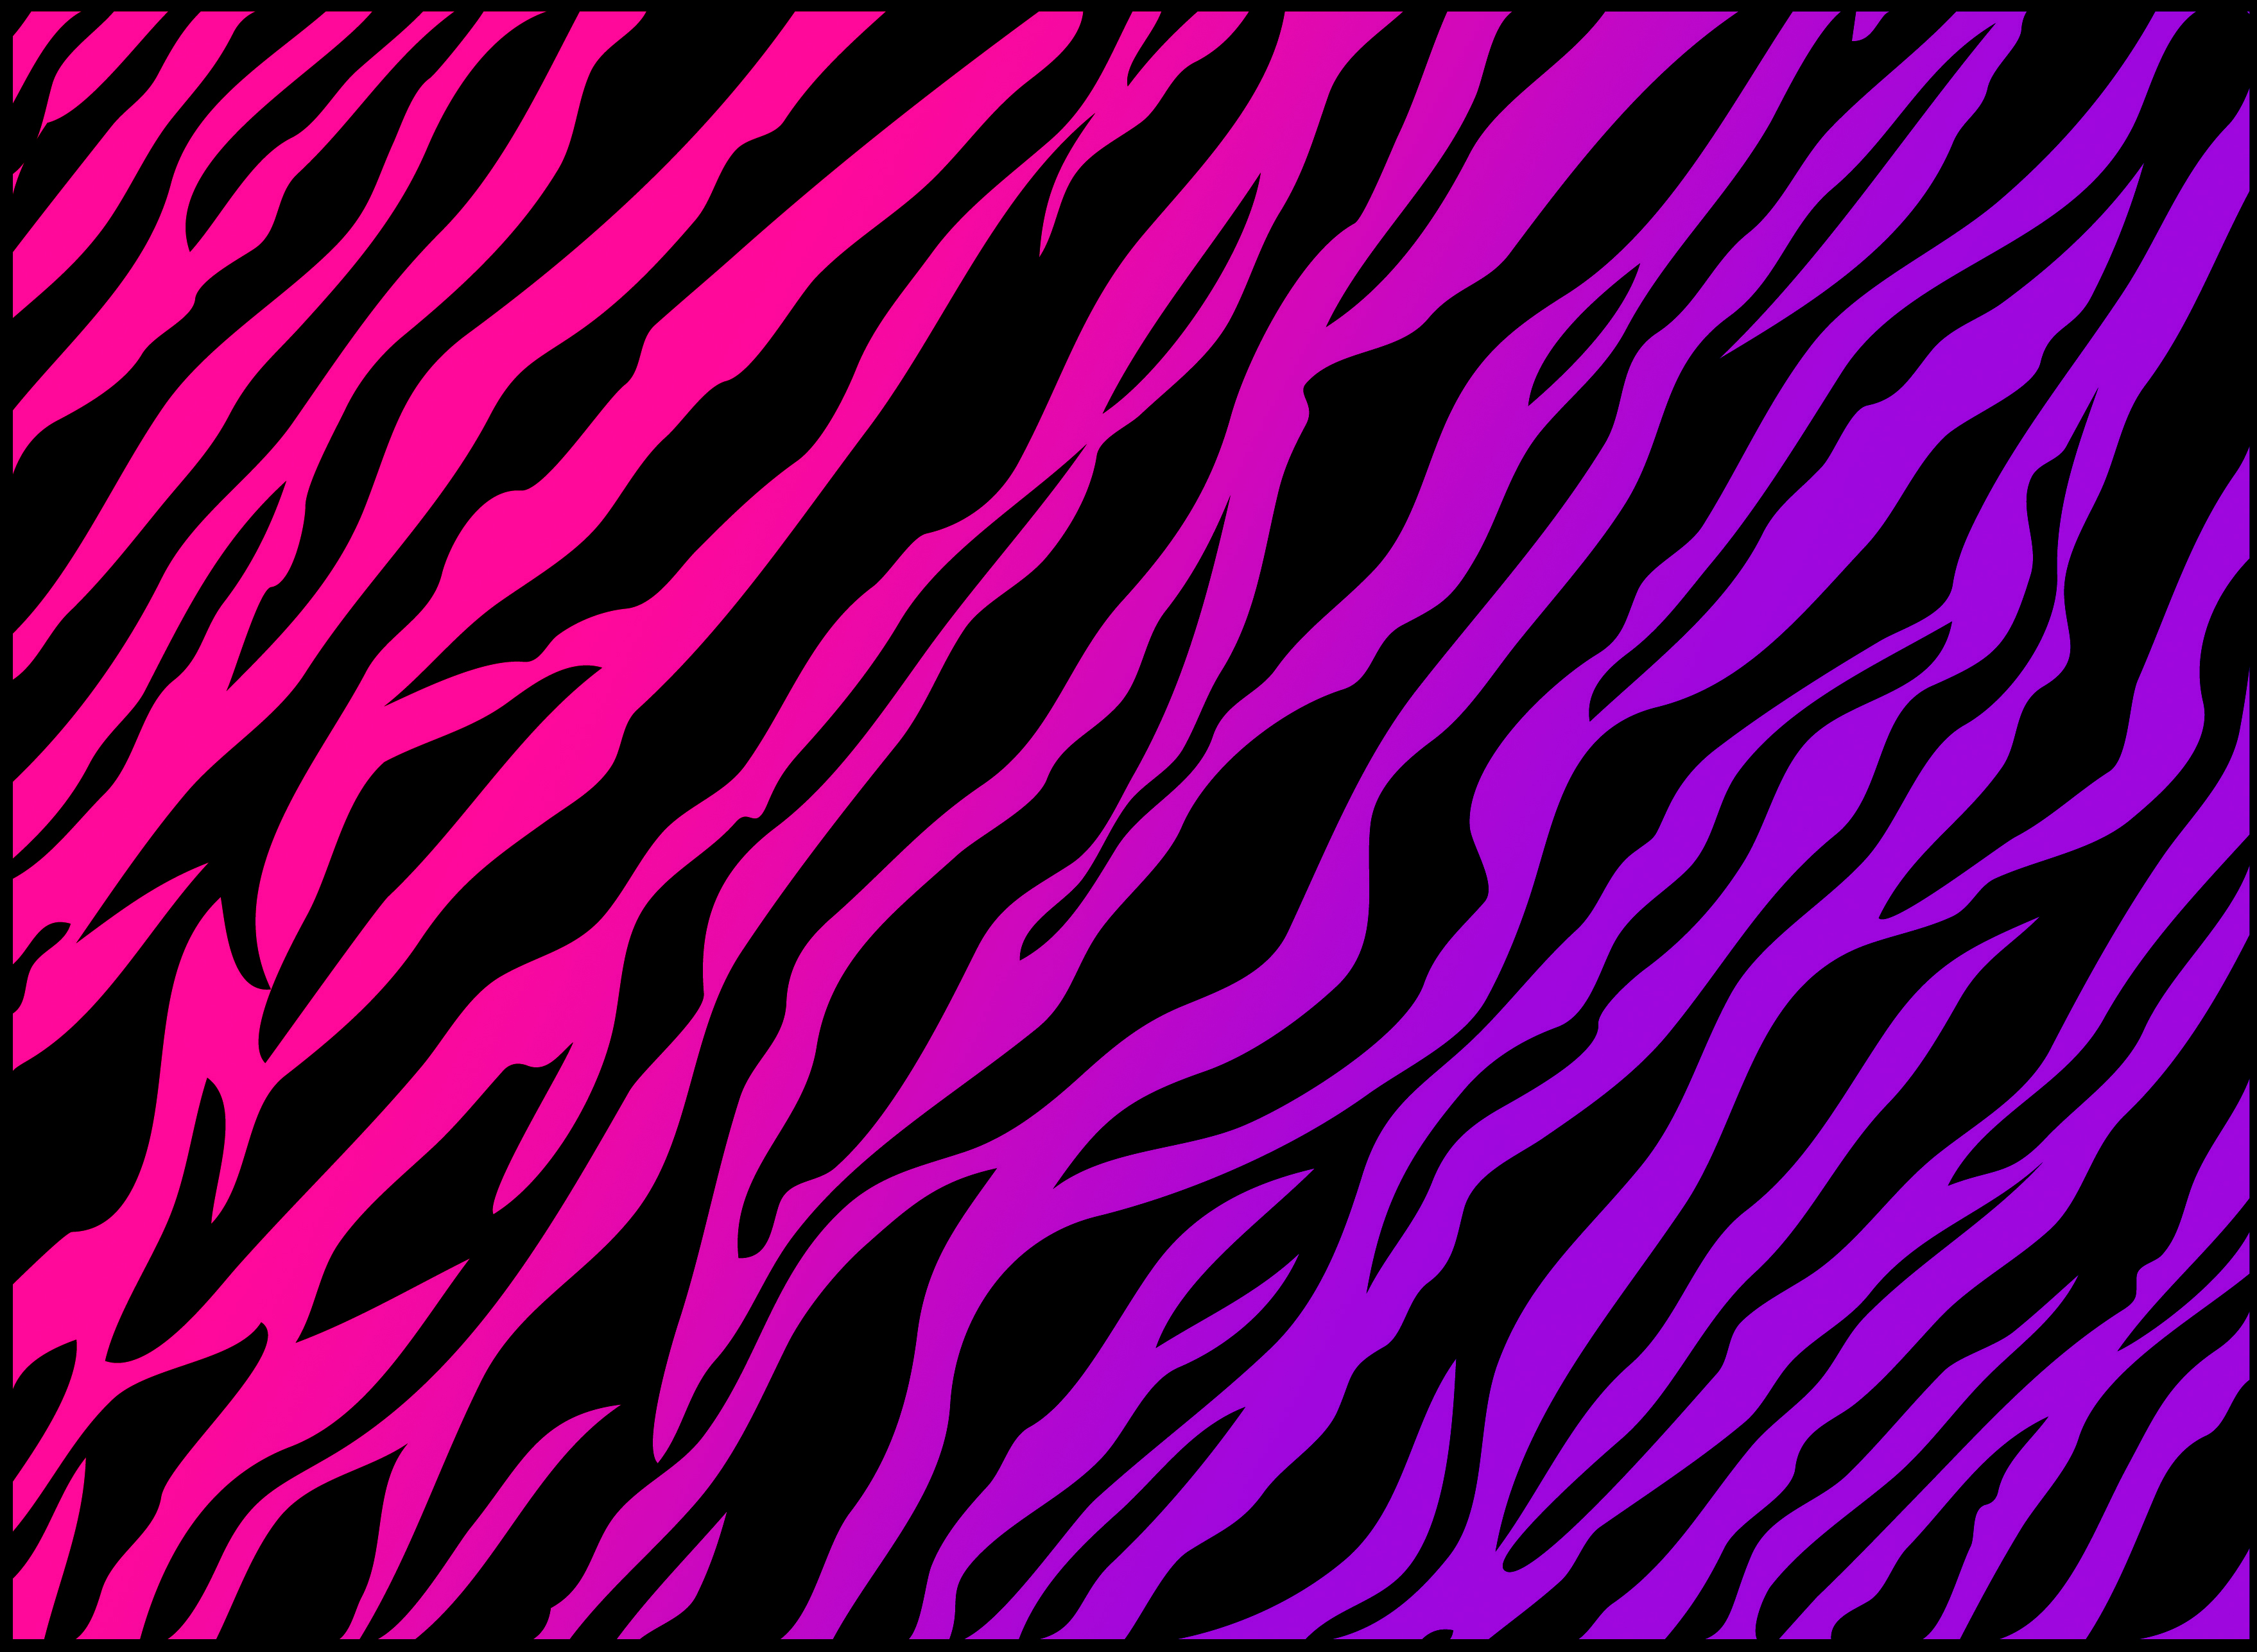  Colorful Zebra Print Genovic Wallpaper 3516x2574 Full HD Wallpapers 3516x2574